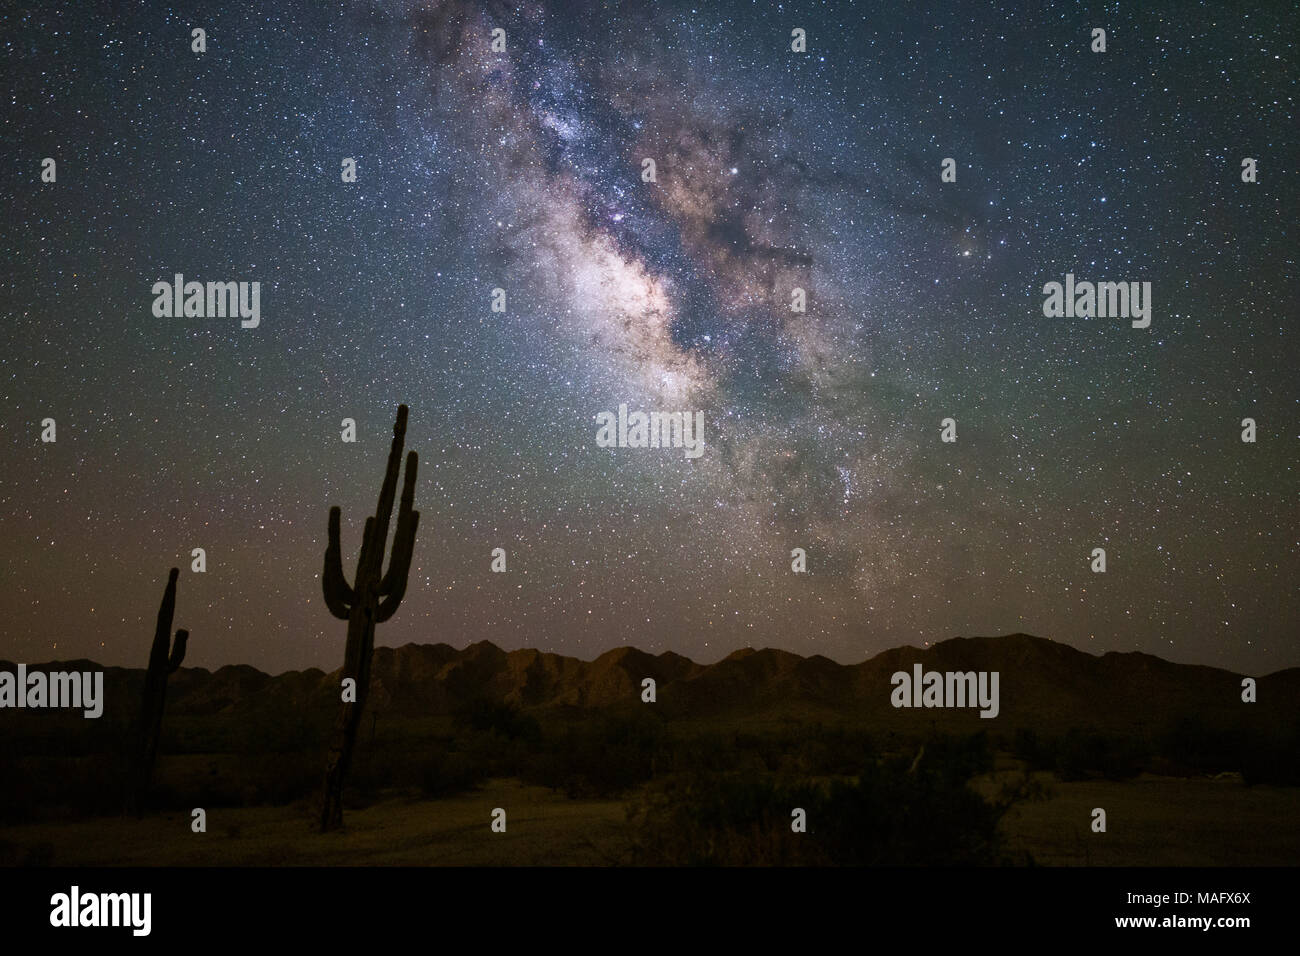 Milky Way galaxy in the night sky above a Saguaro cactus in the Sonoran Desert near Phoenix, Arizona Stock Photo